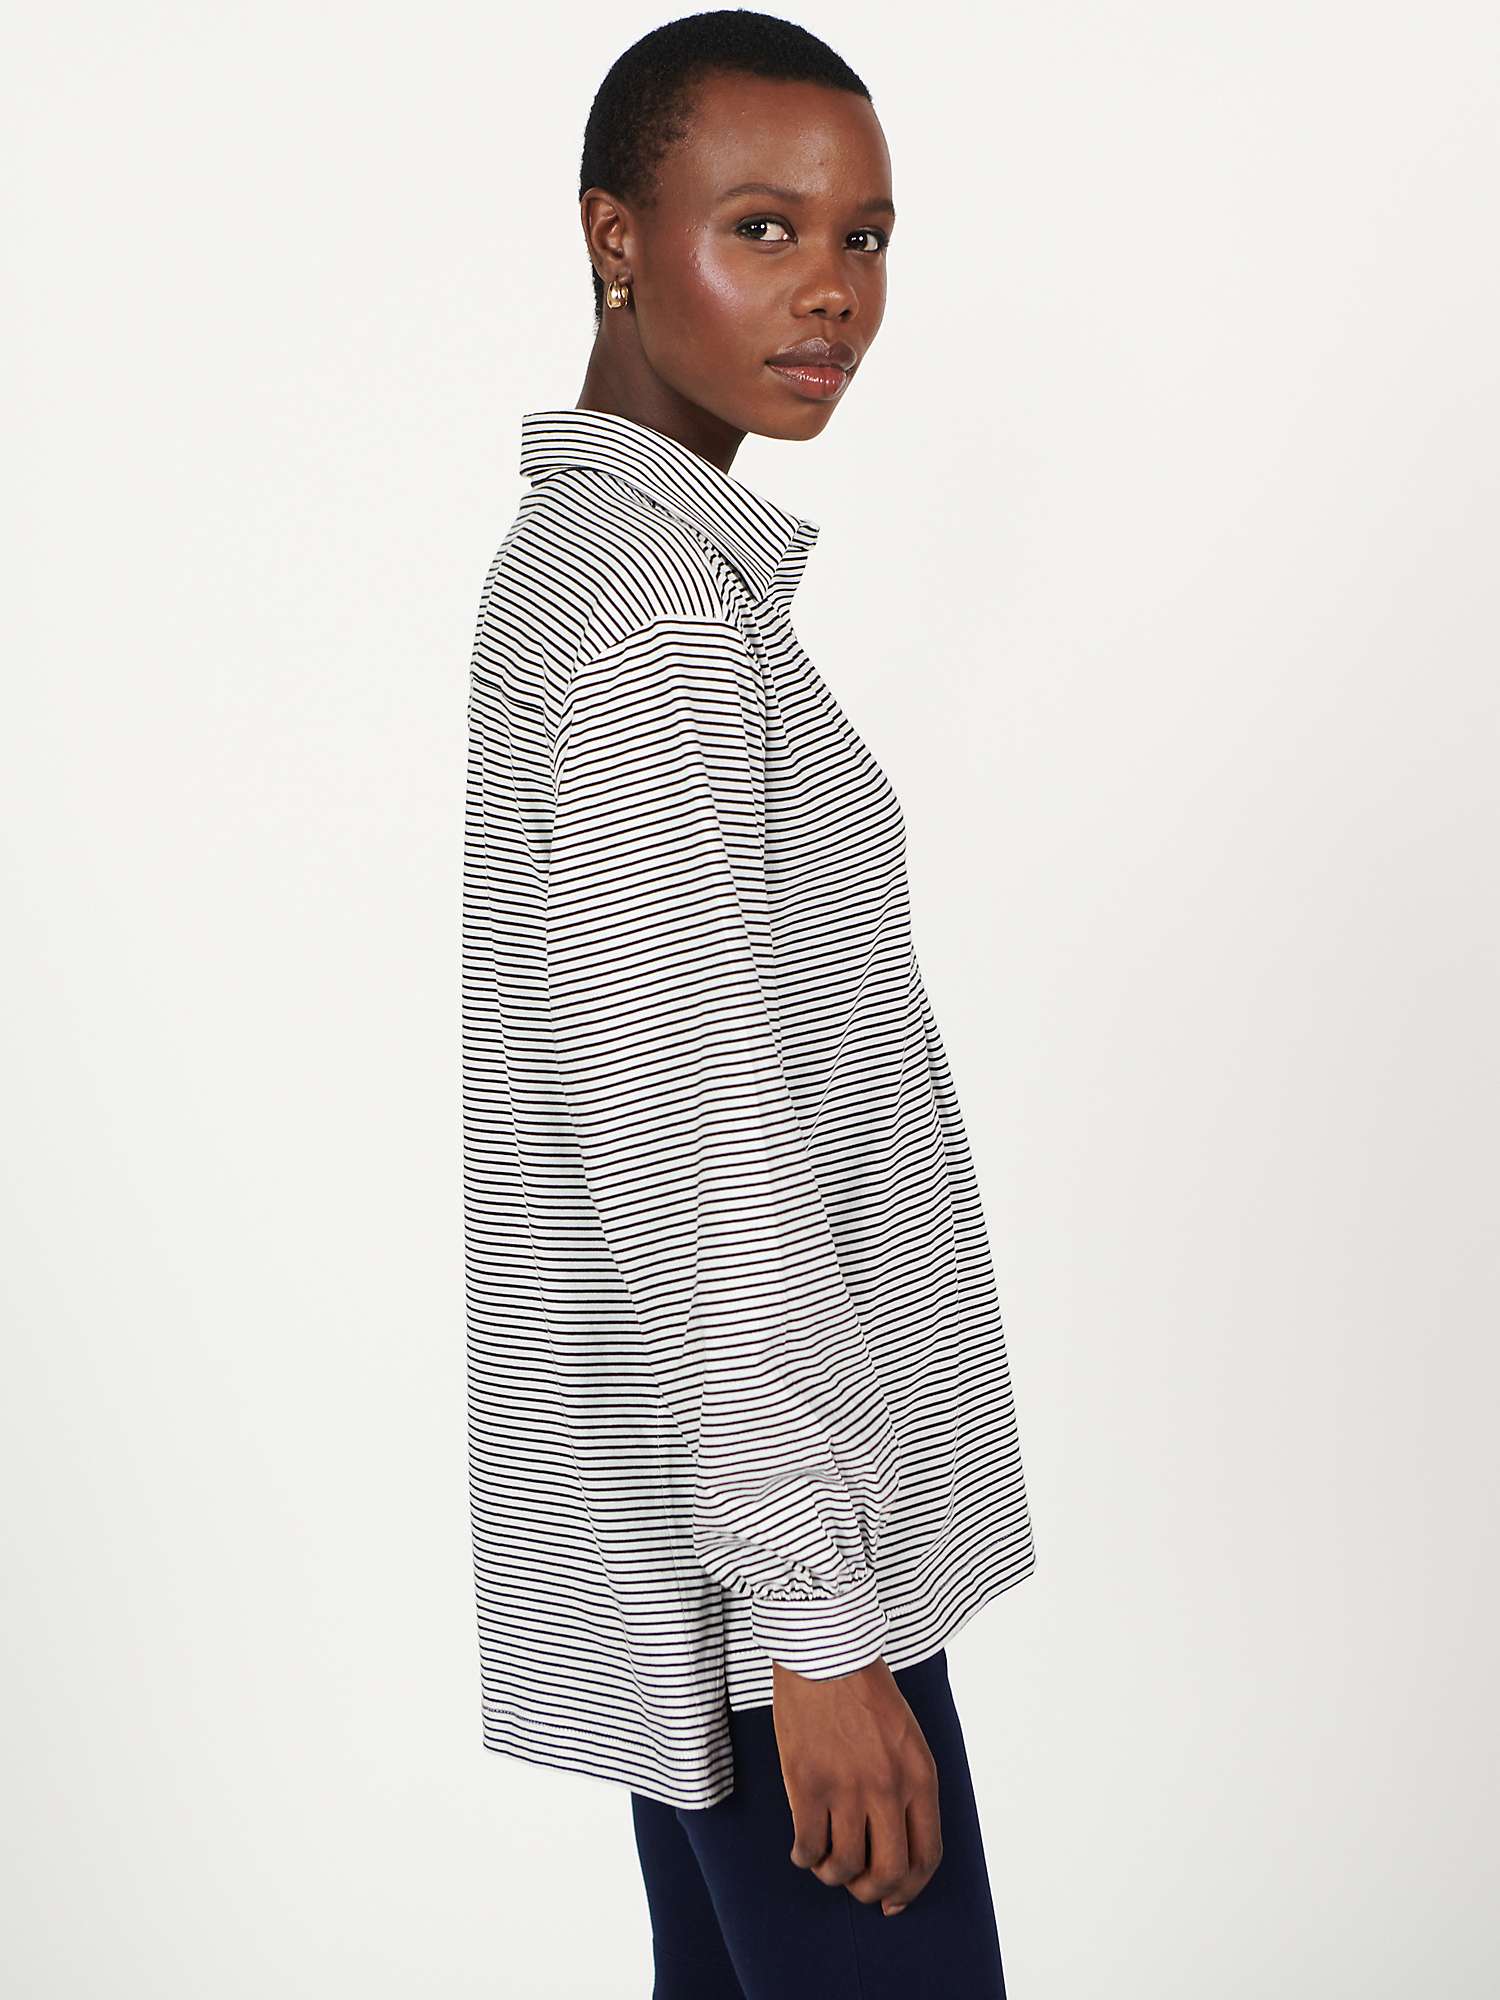 Buy NRBY Monia Stripe Cotton Jersey Shirt, Navy/White Online at johnlewis.com